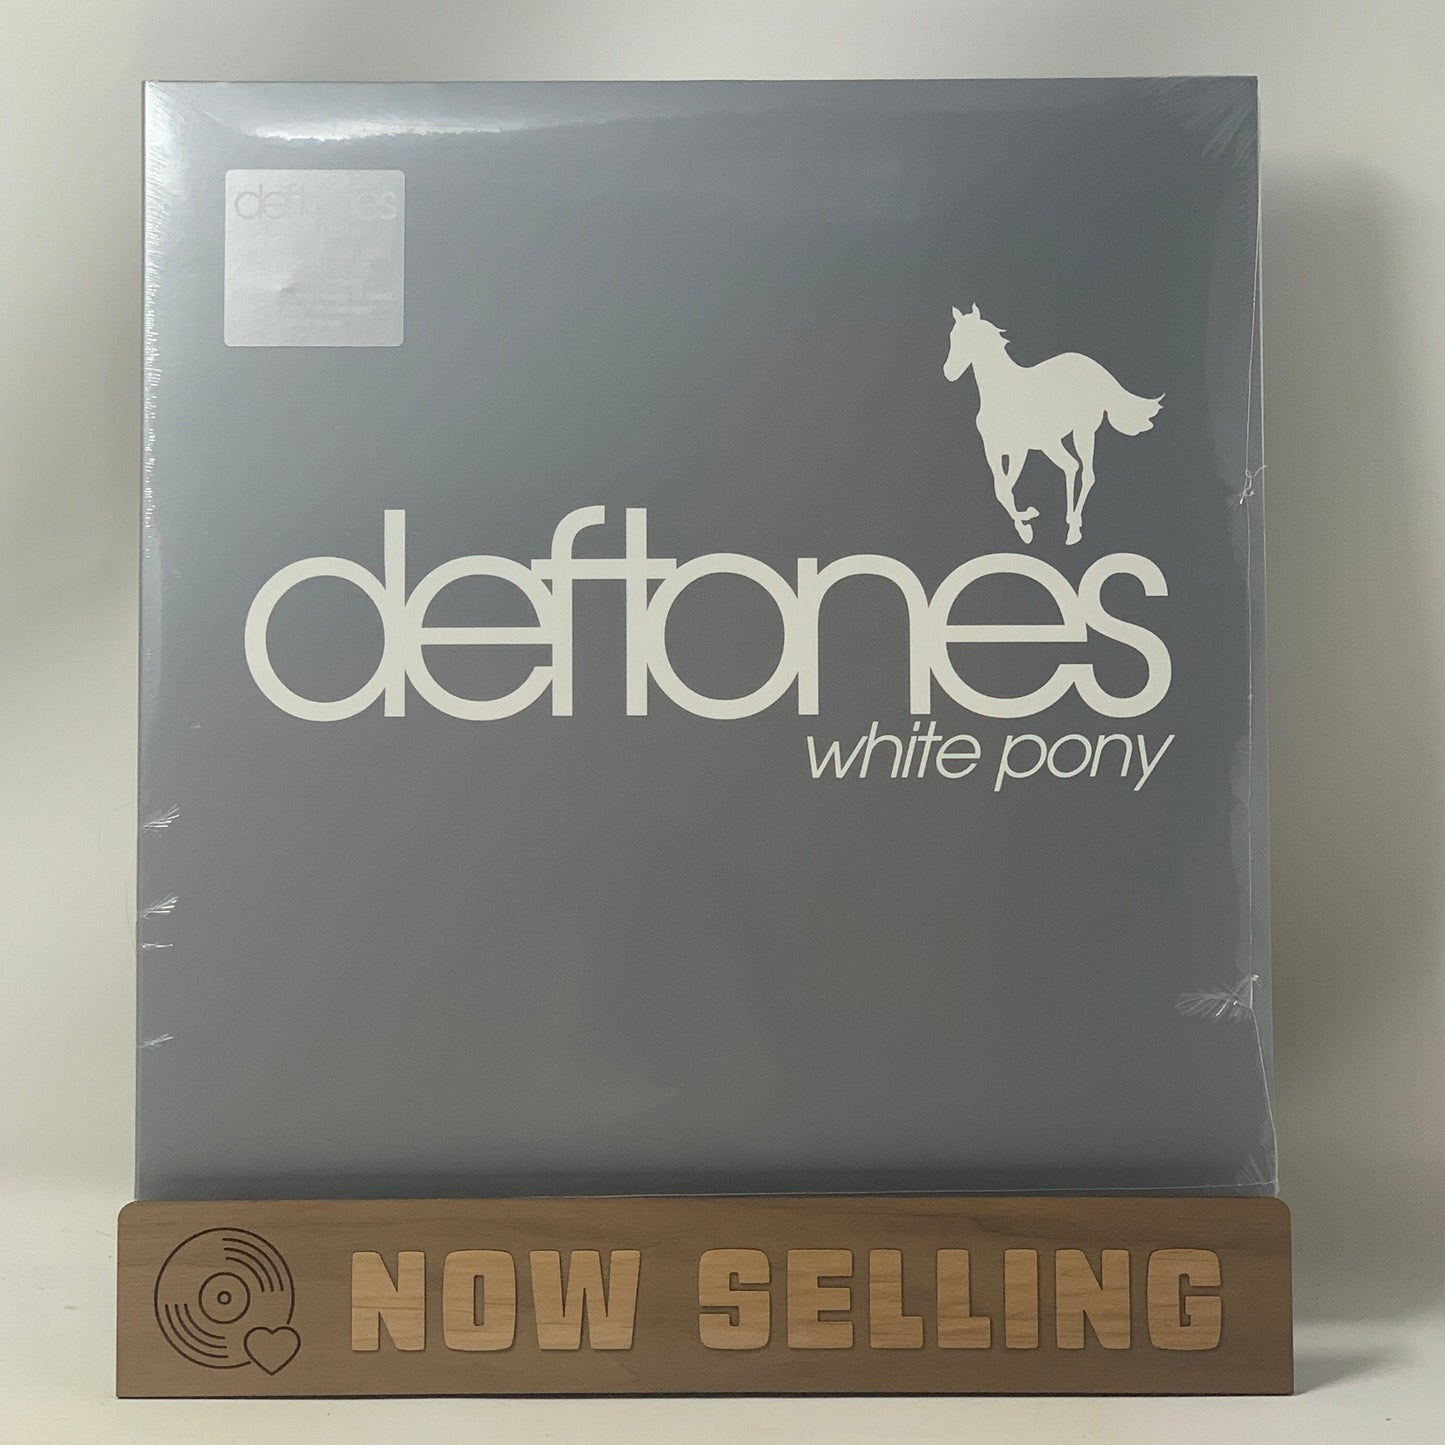 Deftones - White Pony Vinyl LP Reissue SEALED.